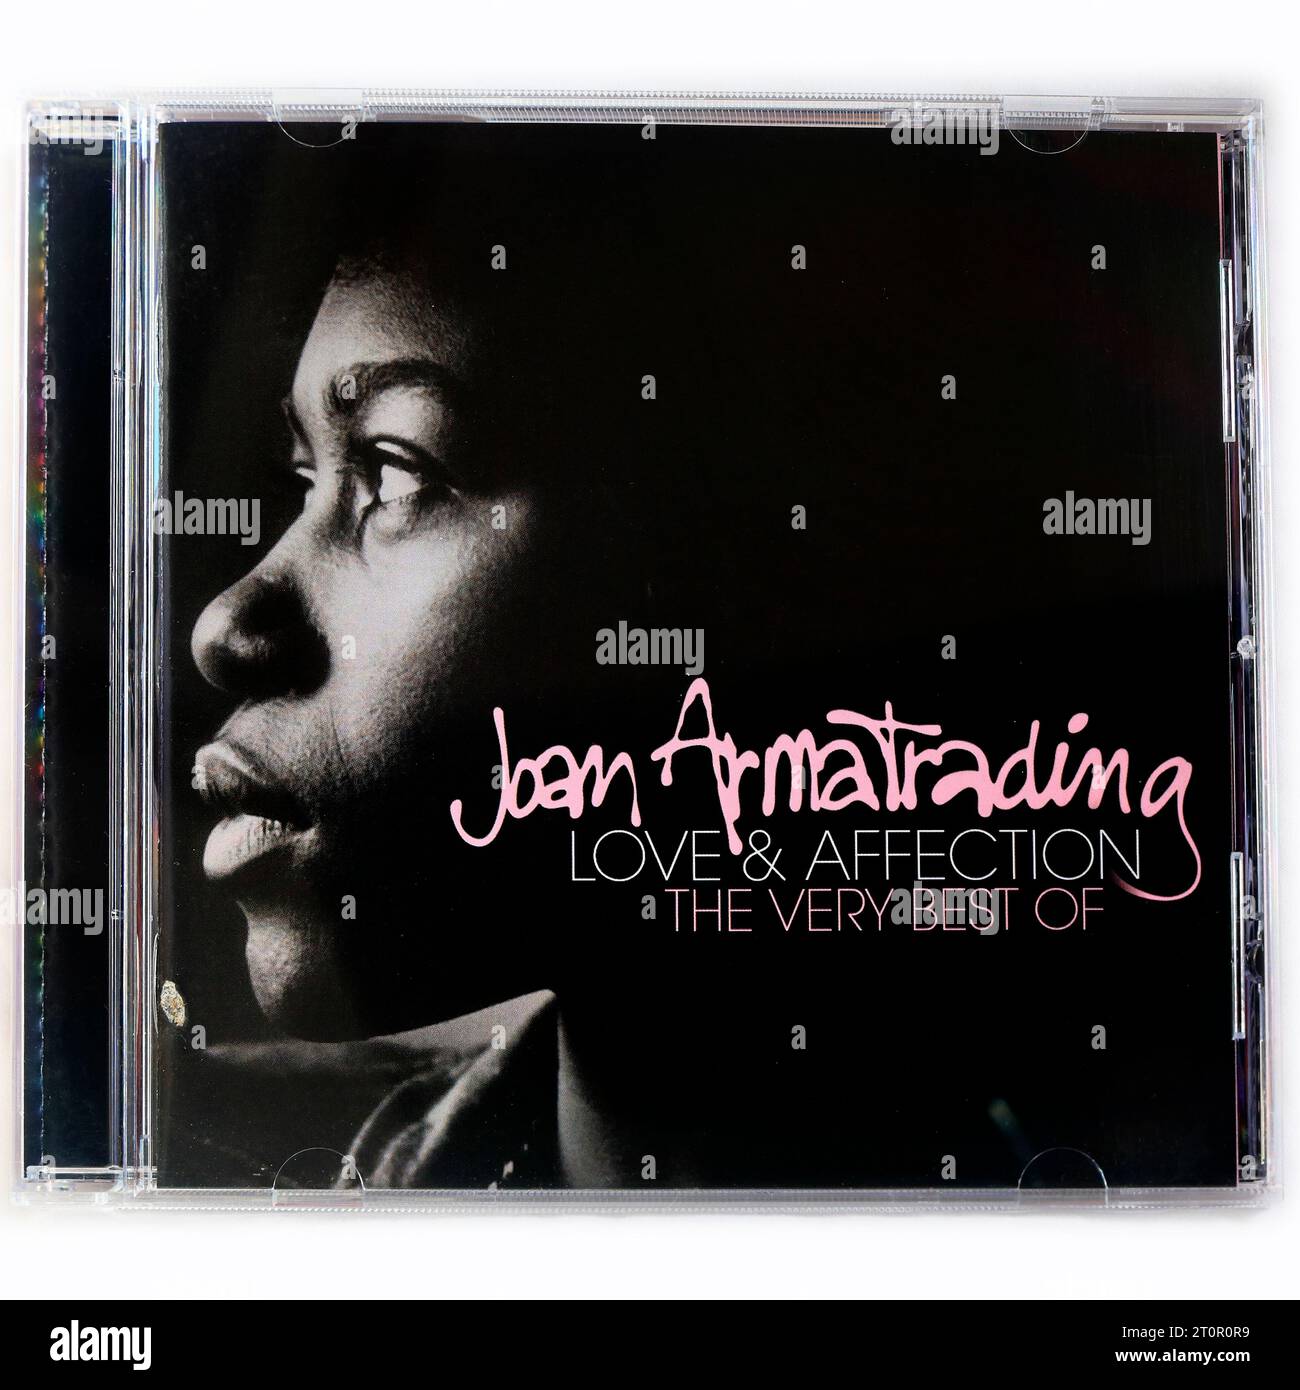 Joan Armatrading - Love & Affection. CD case on light background Stock Photo